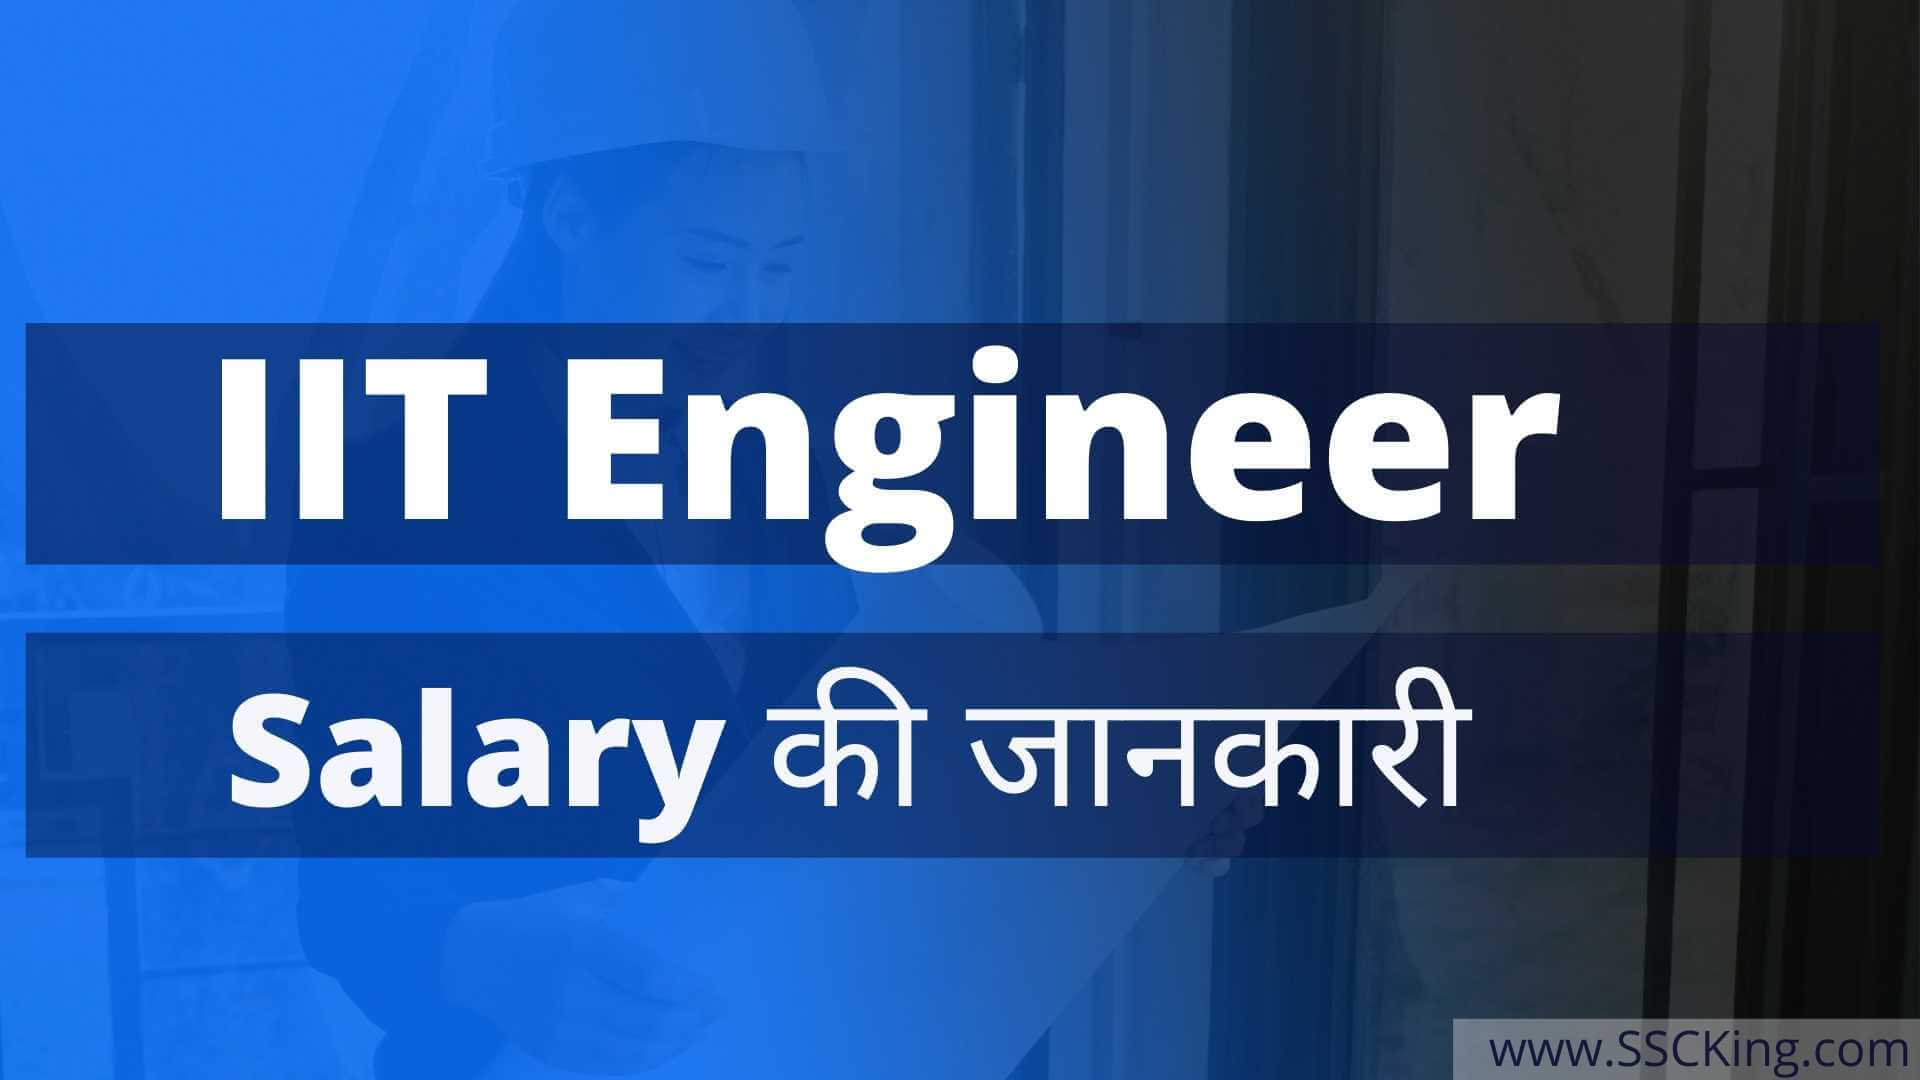 IIT Engineer की Salary की पूरी जानकारी